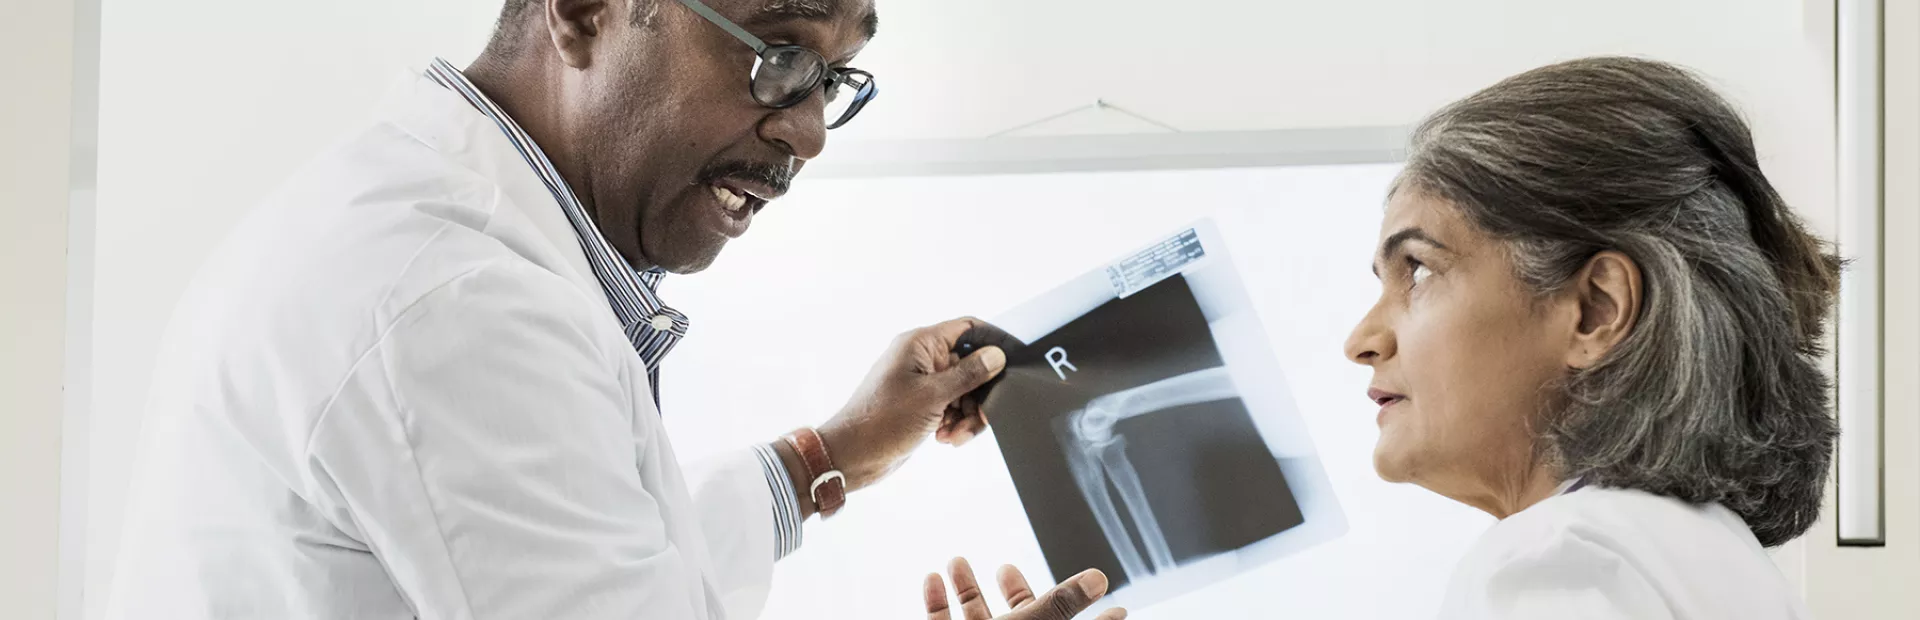 Two doctors examining X-ray